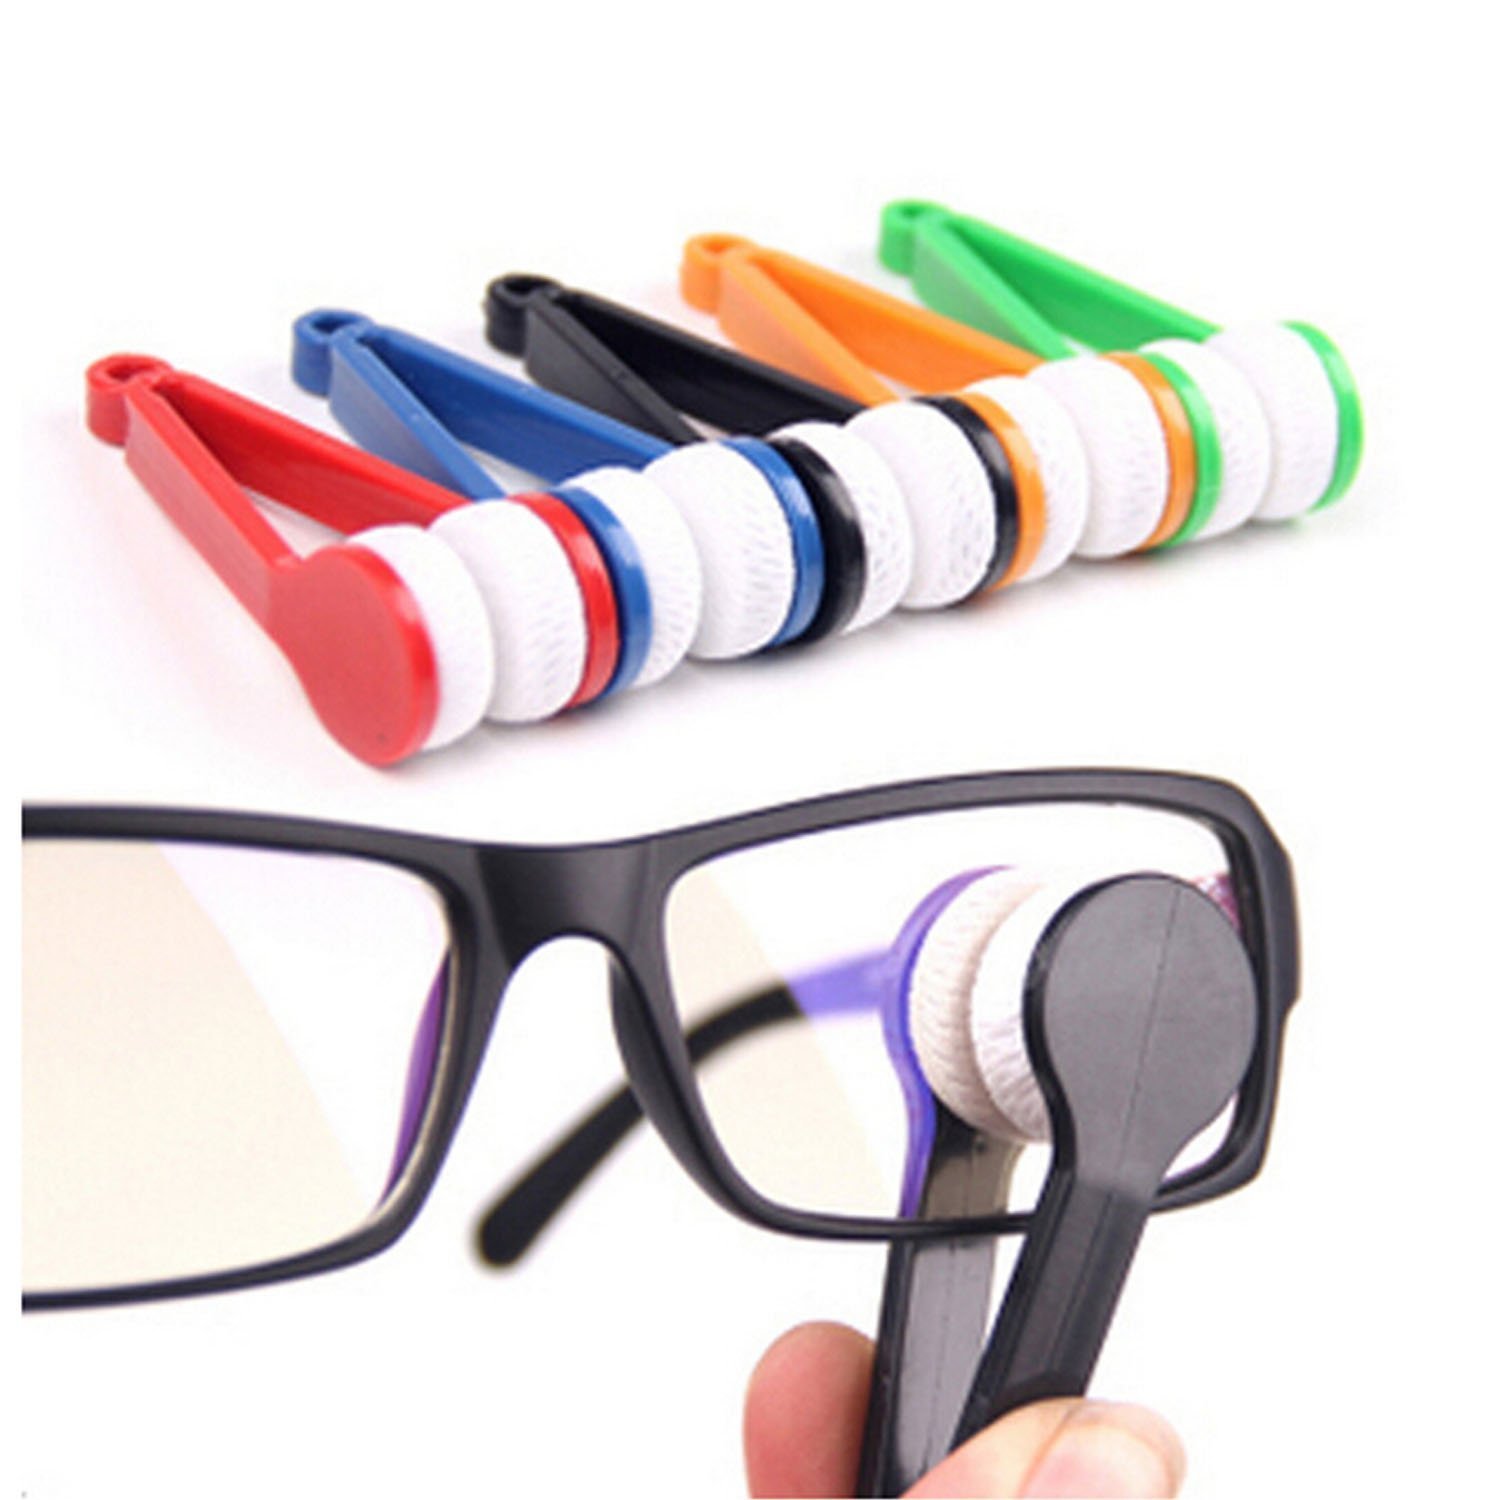 Glasses Cleaner Essentials: Streak-Free Vision Tips